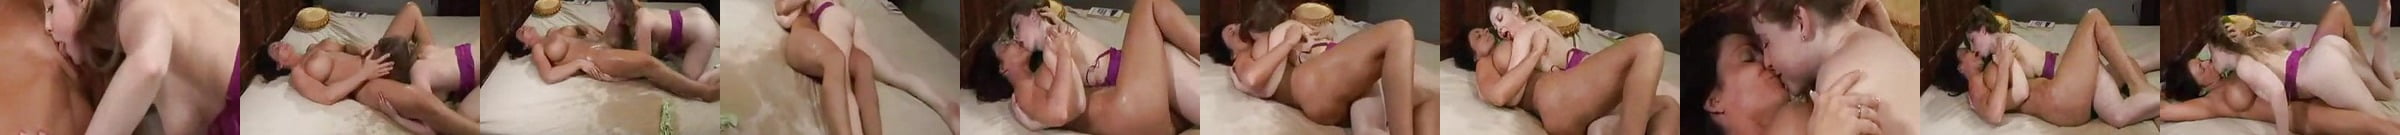 Lesbian Orgasm Compilation 5 Free Free New Lesbian Porn Video